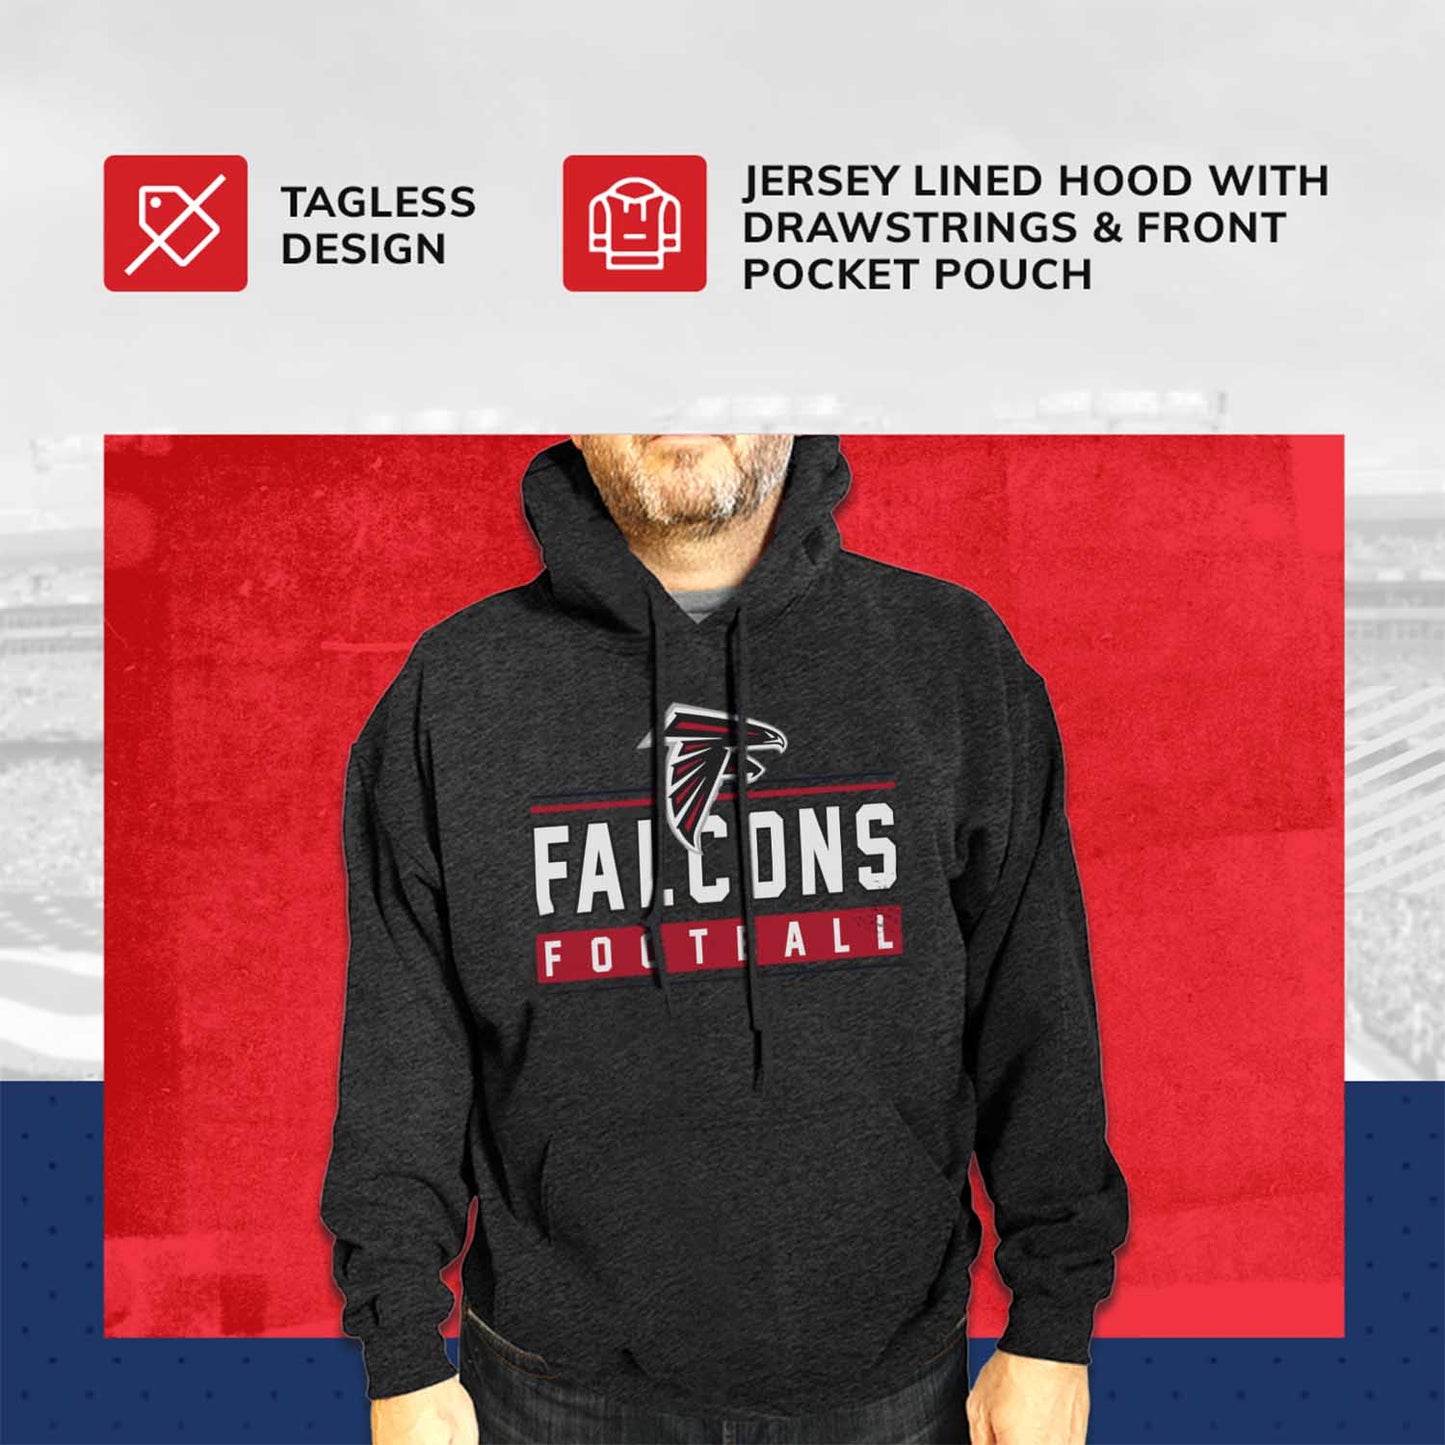 Atlanta Falcons NFL Adult True Fan Hooded Charcoal Sweatshirt - Charcoal